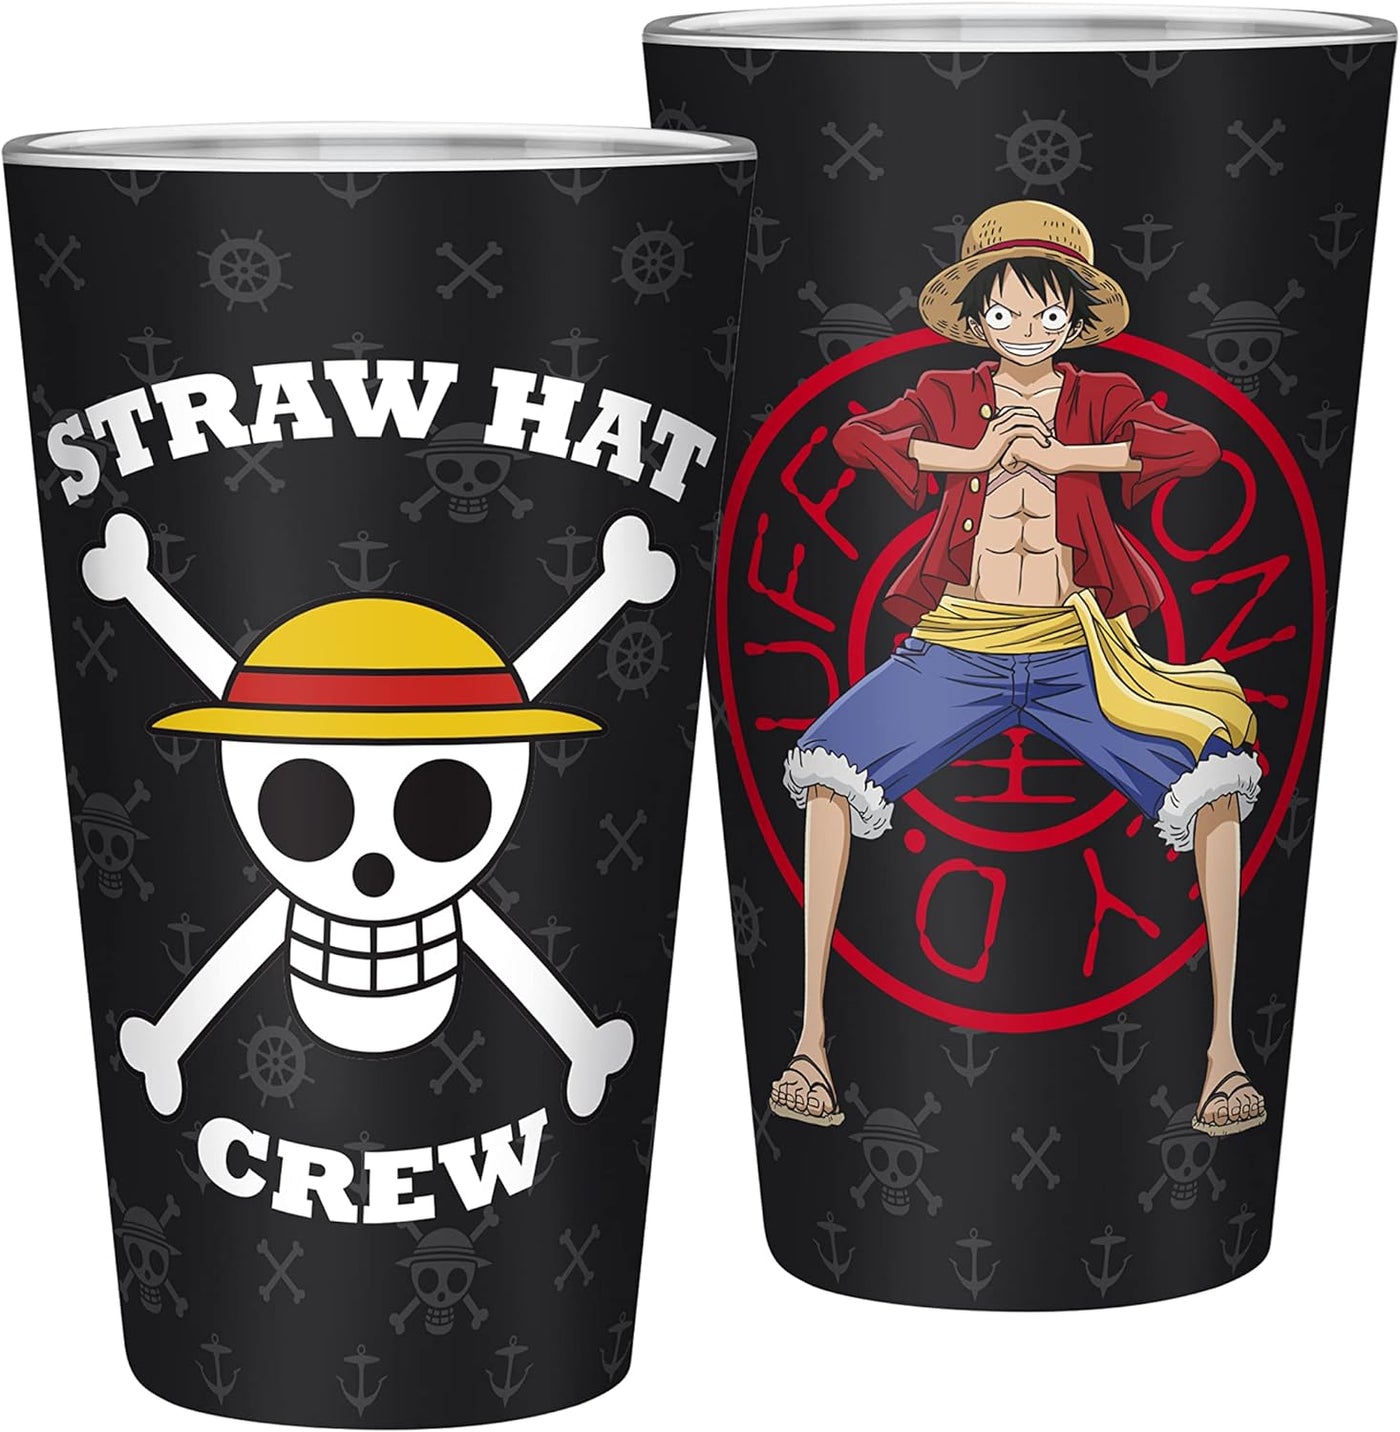 ABYSTYLE One Piece Luffy Ceramic Coffee Tea Mug 16 Oz. & Absorbent Coaster  Gift Set Anime Manga Drinkware 2 Pcs